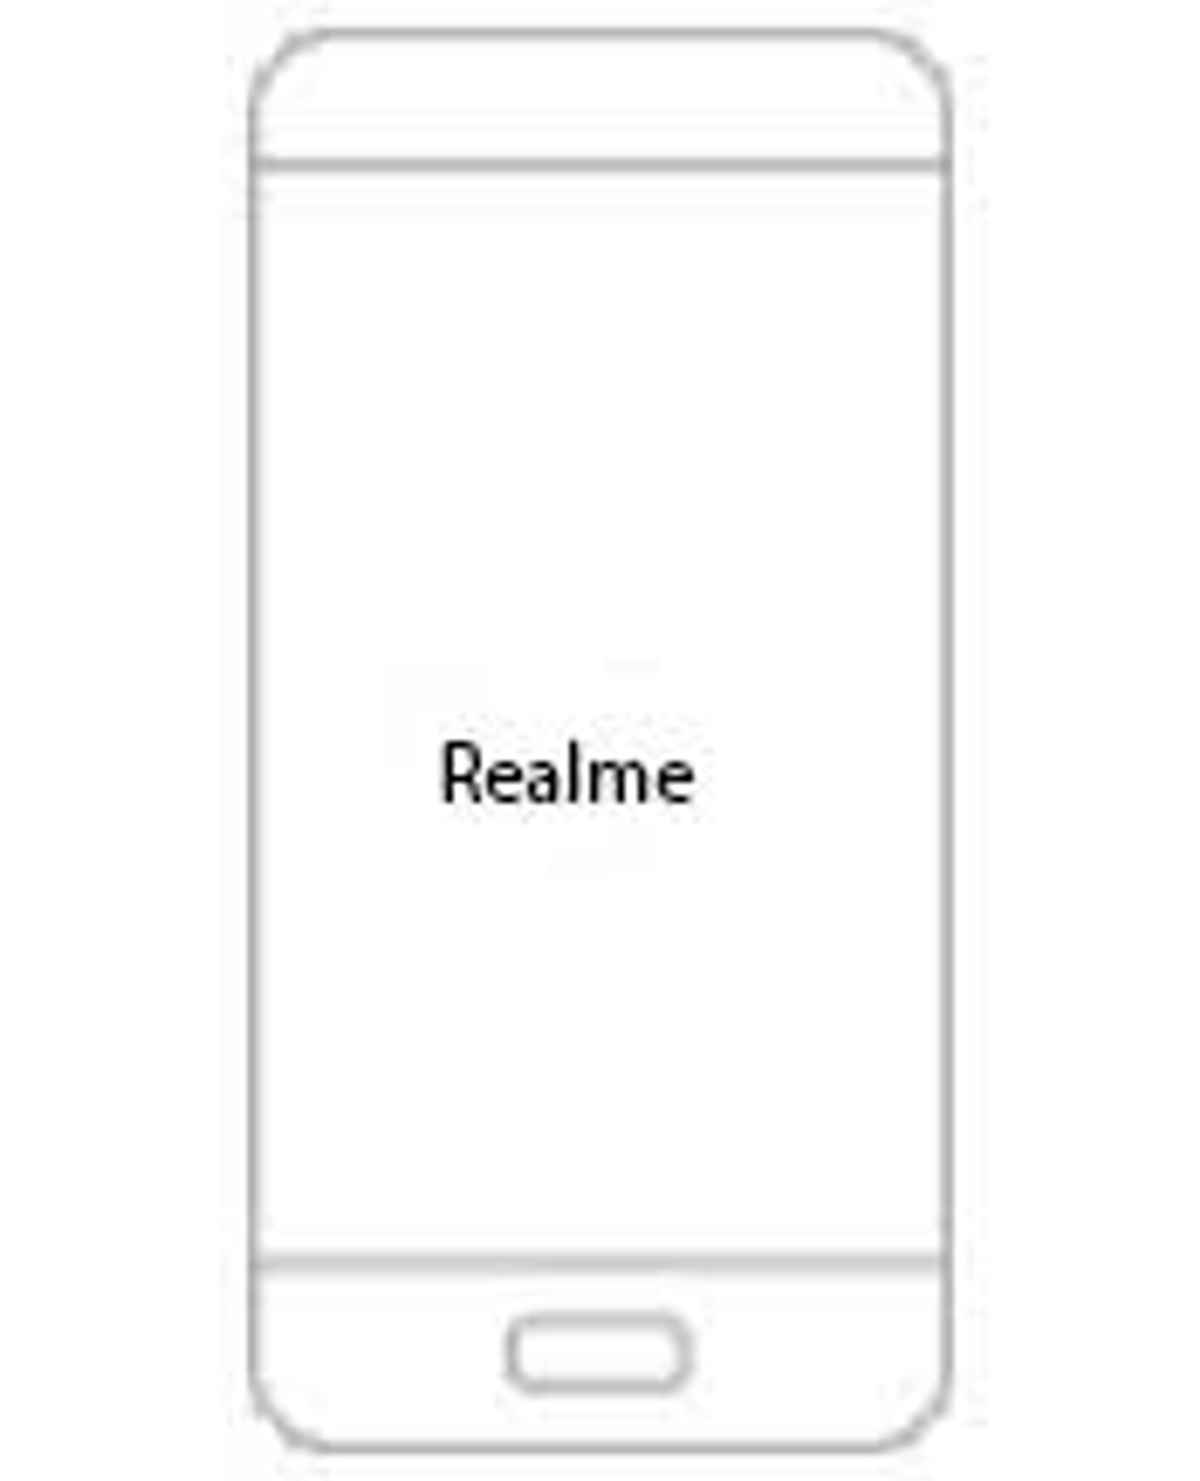 Realme X50 Pro Player